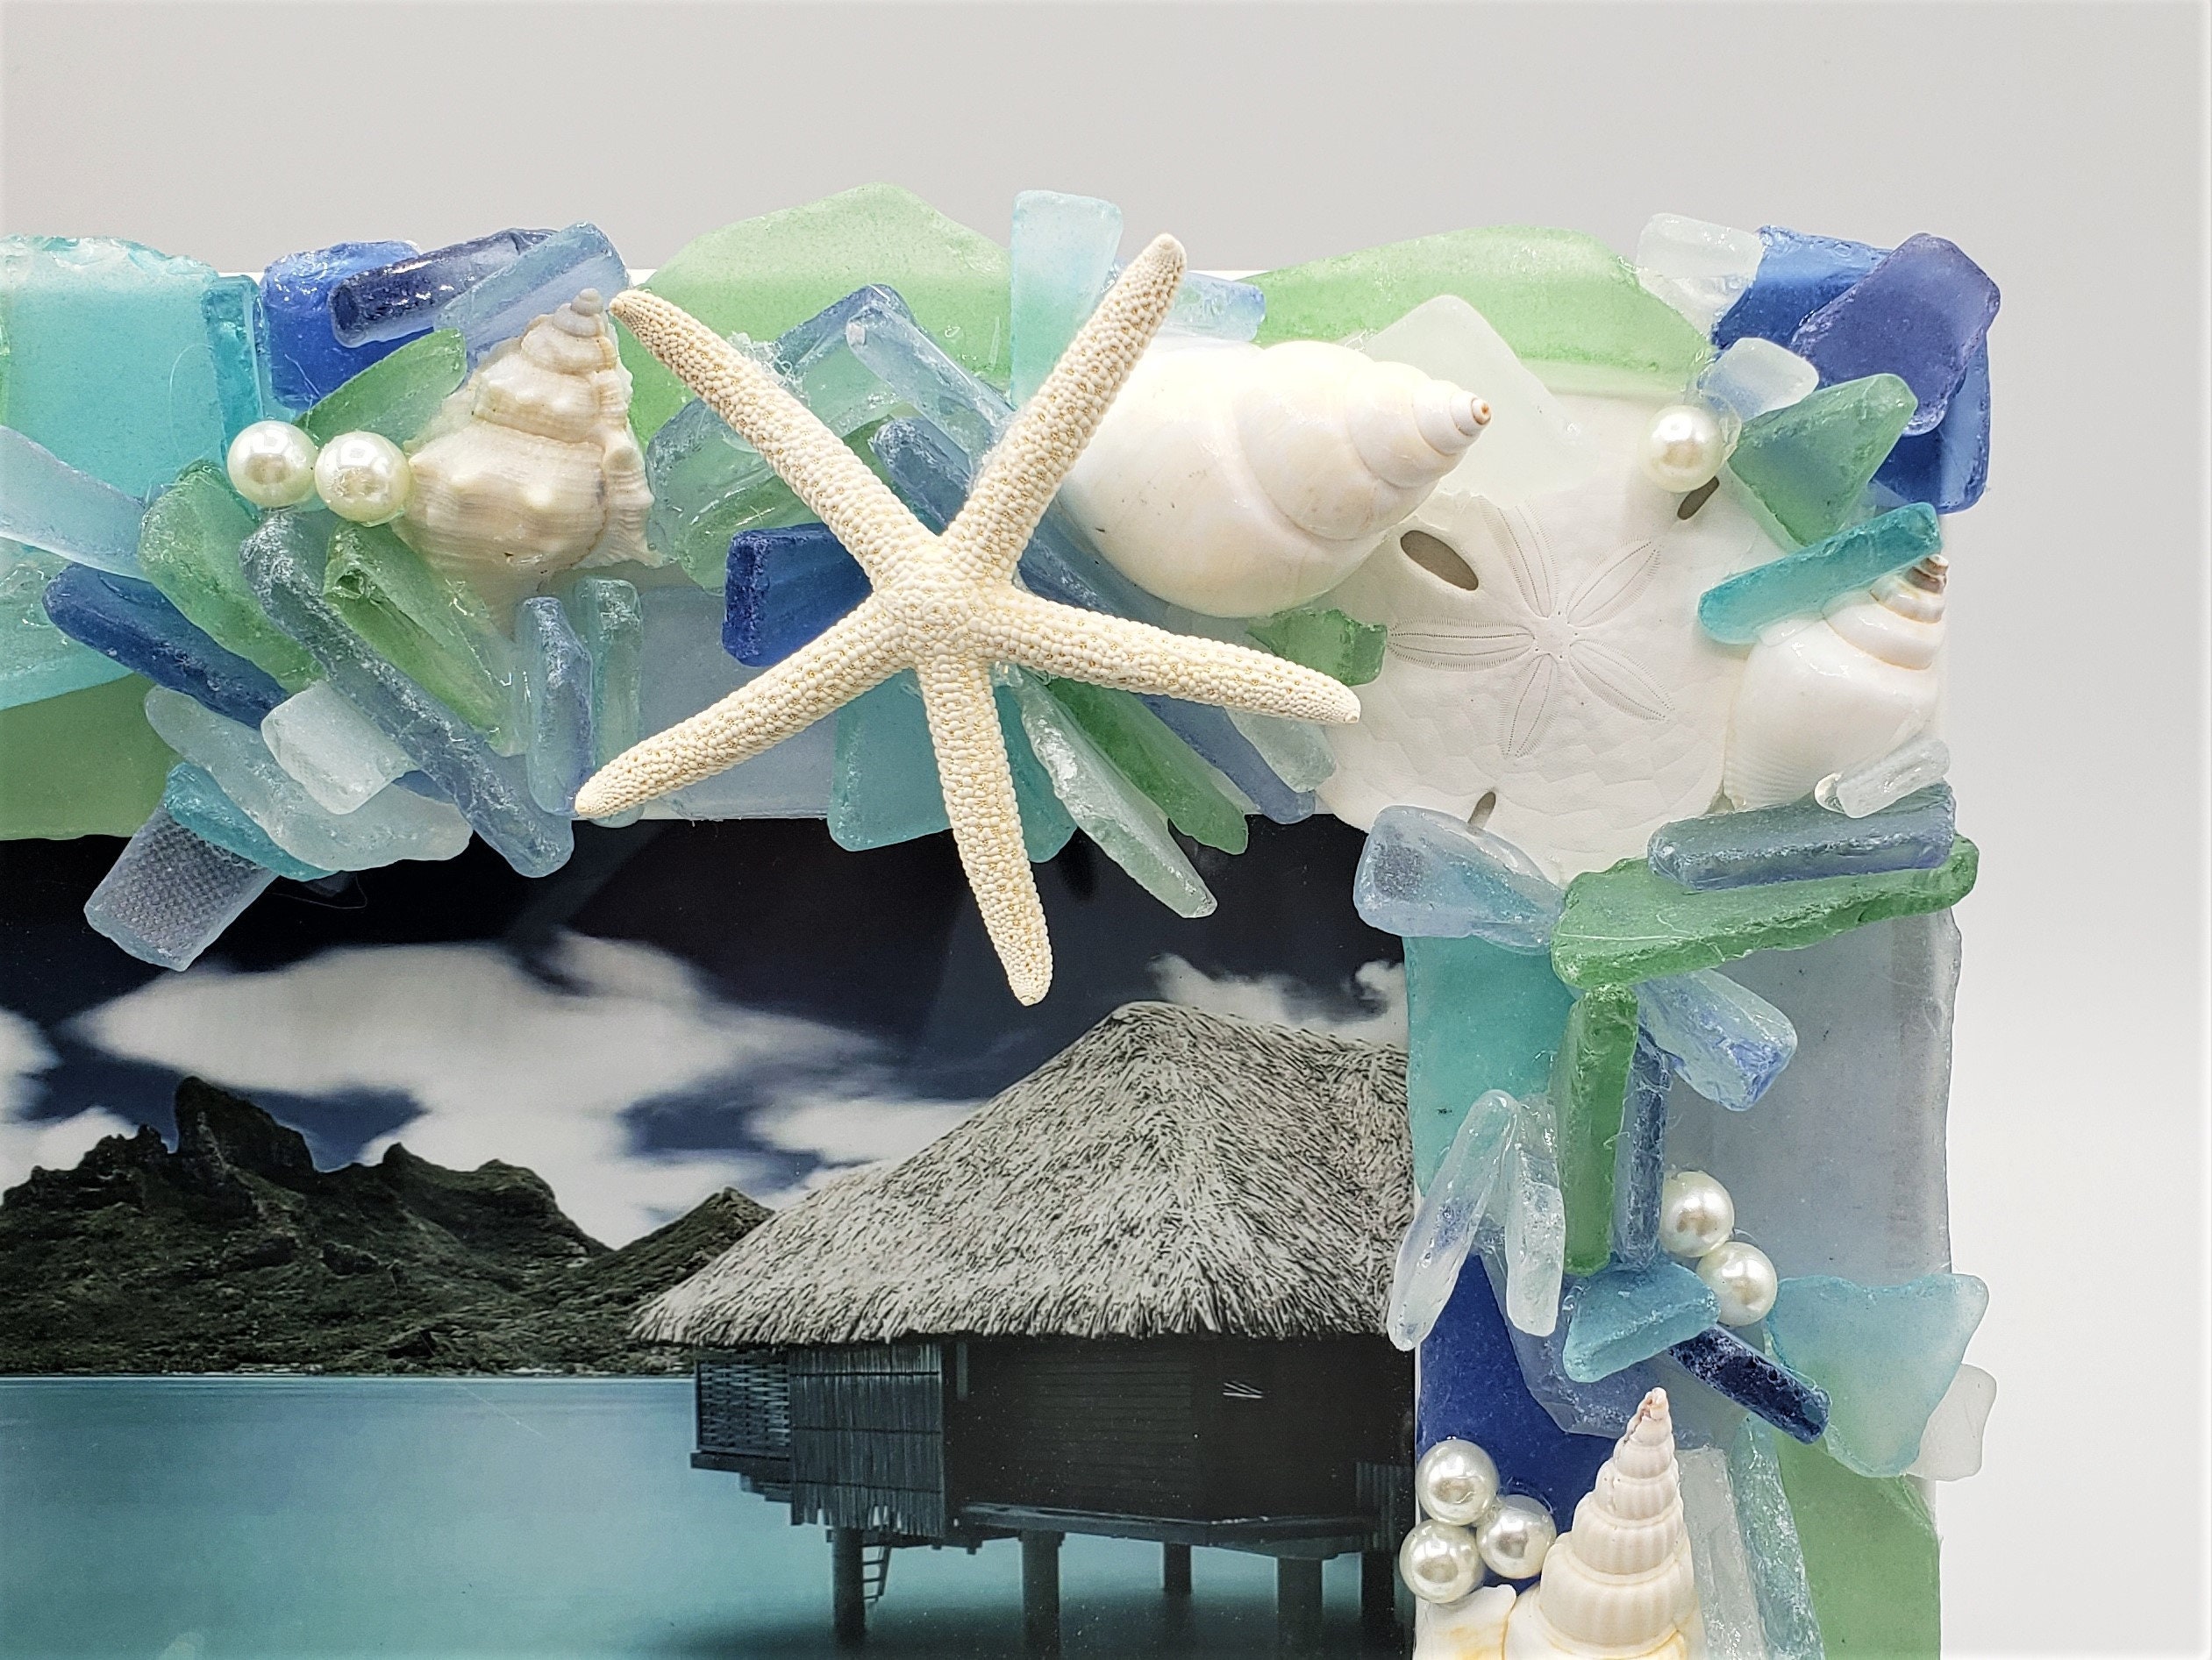 Bulk Sea Glass LARGE, Bulk Beach Glass, Wedding Place Card LARGE PC 2 –  Beach Grass Cottage - Artisan Handmade Beach Decor